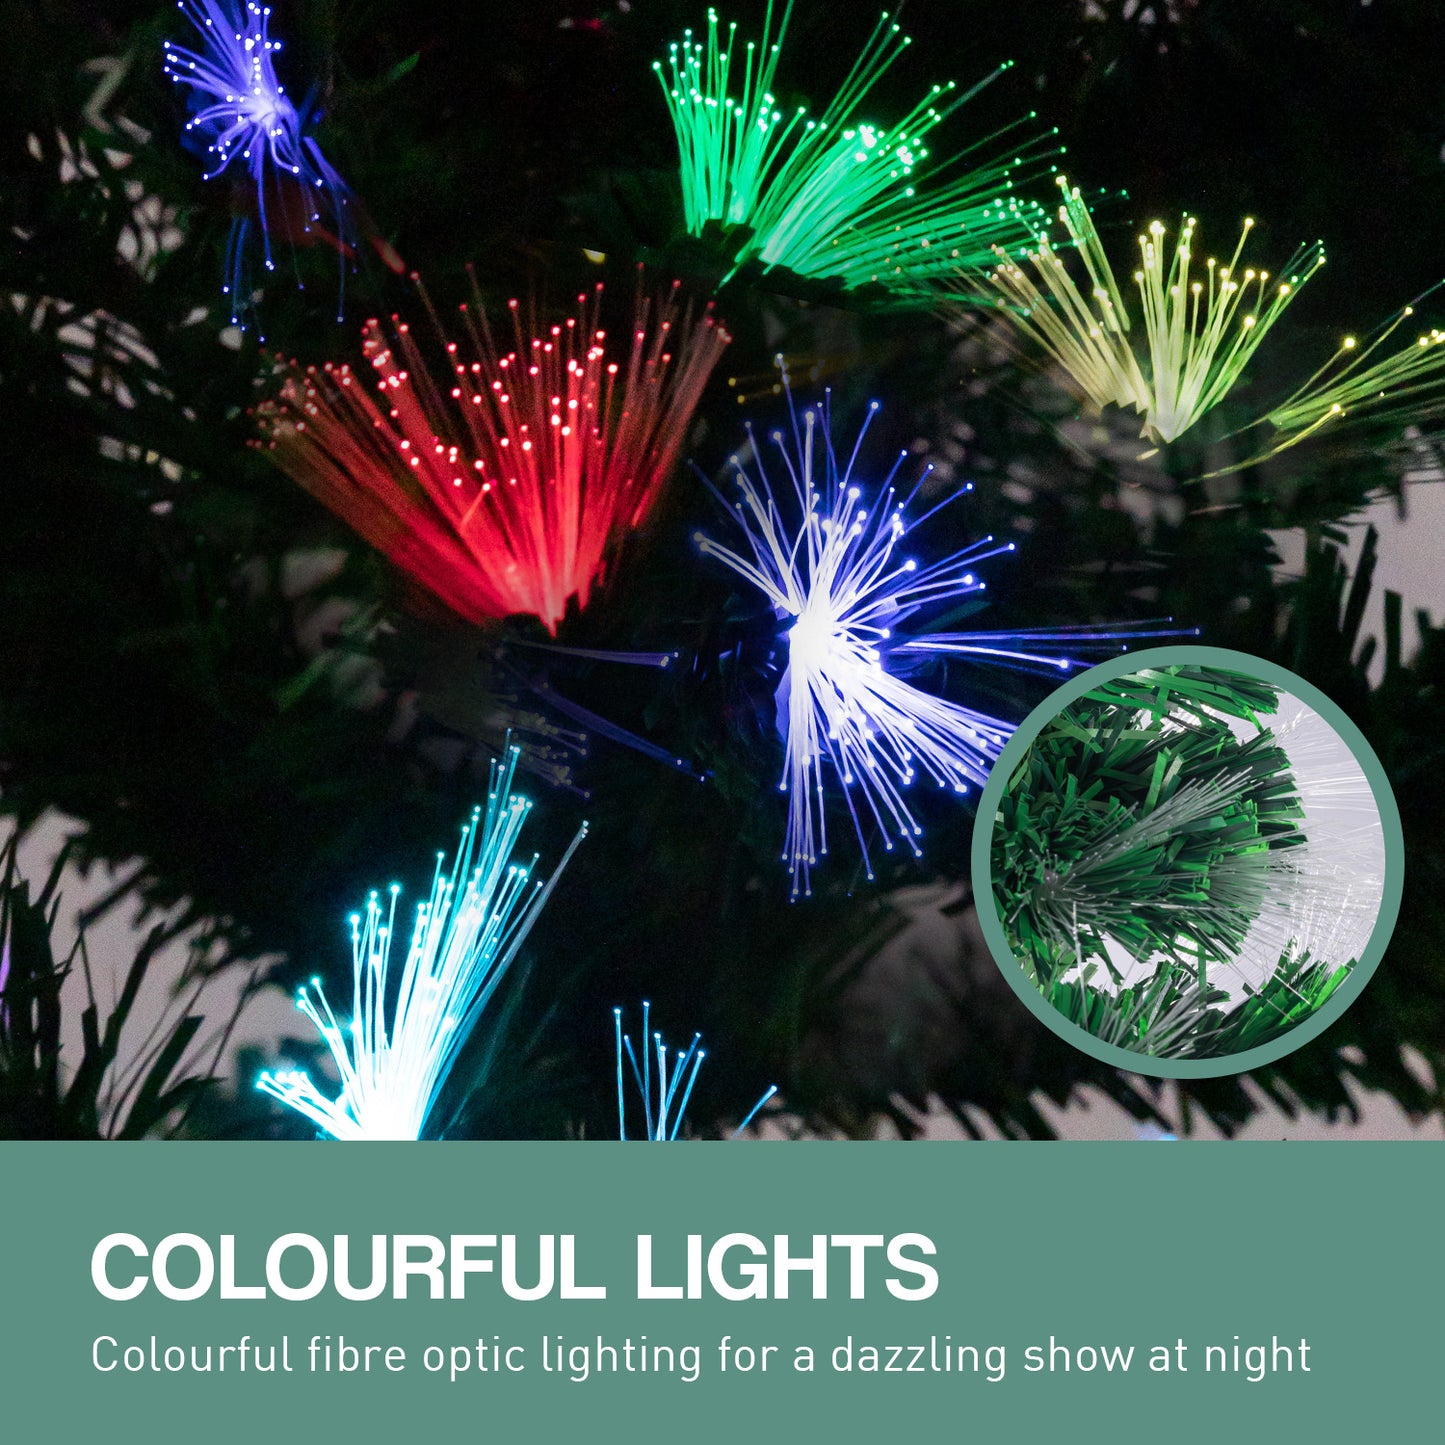 8ft 2.4m 320 Tips Enchanted Pre Lit Fibre Optic Christmas Tree Stars Xmas Decor